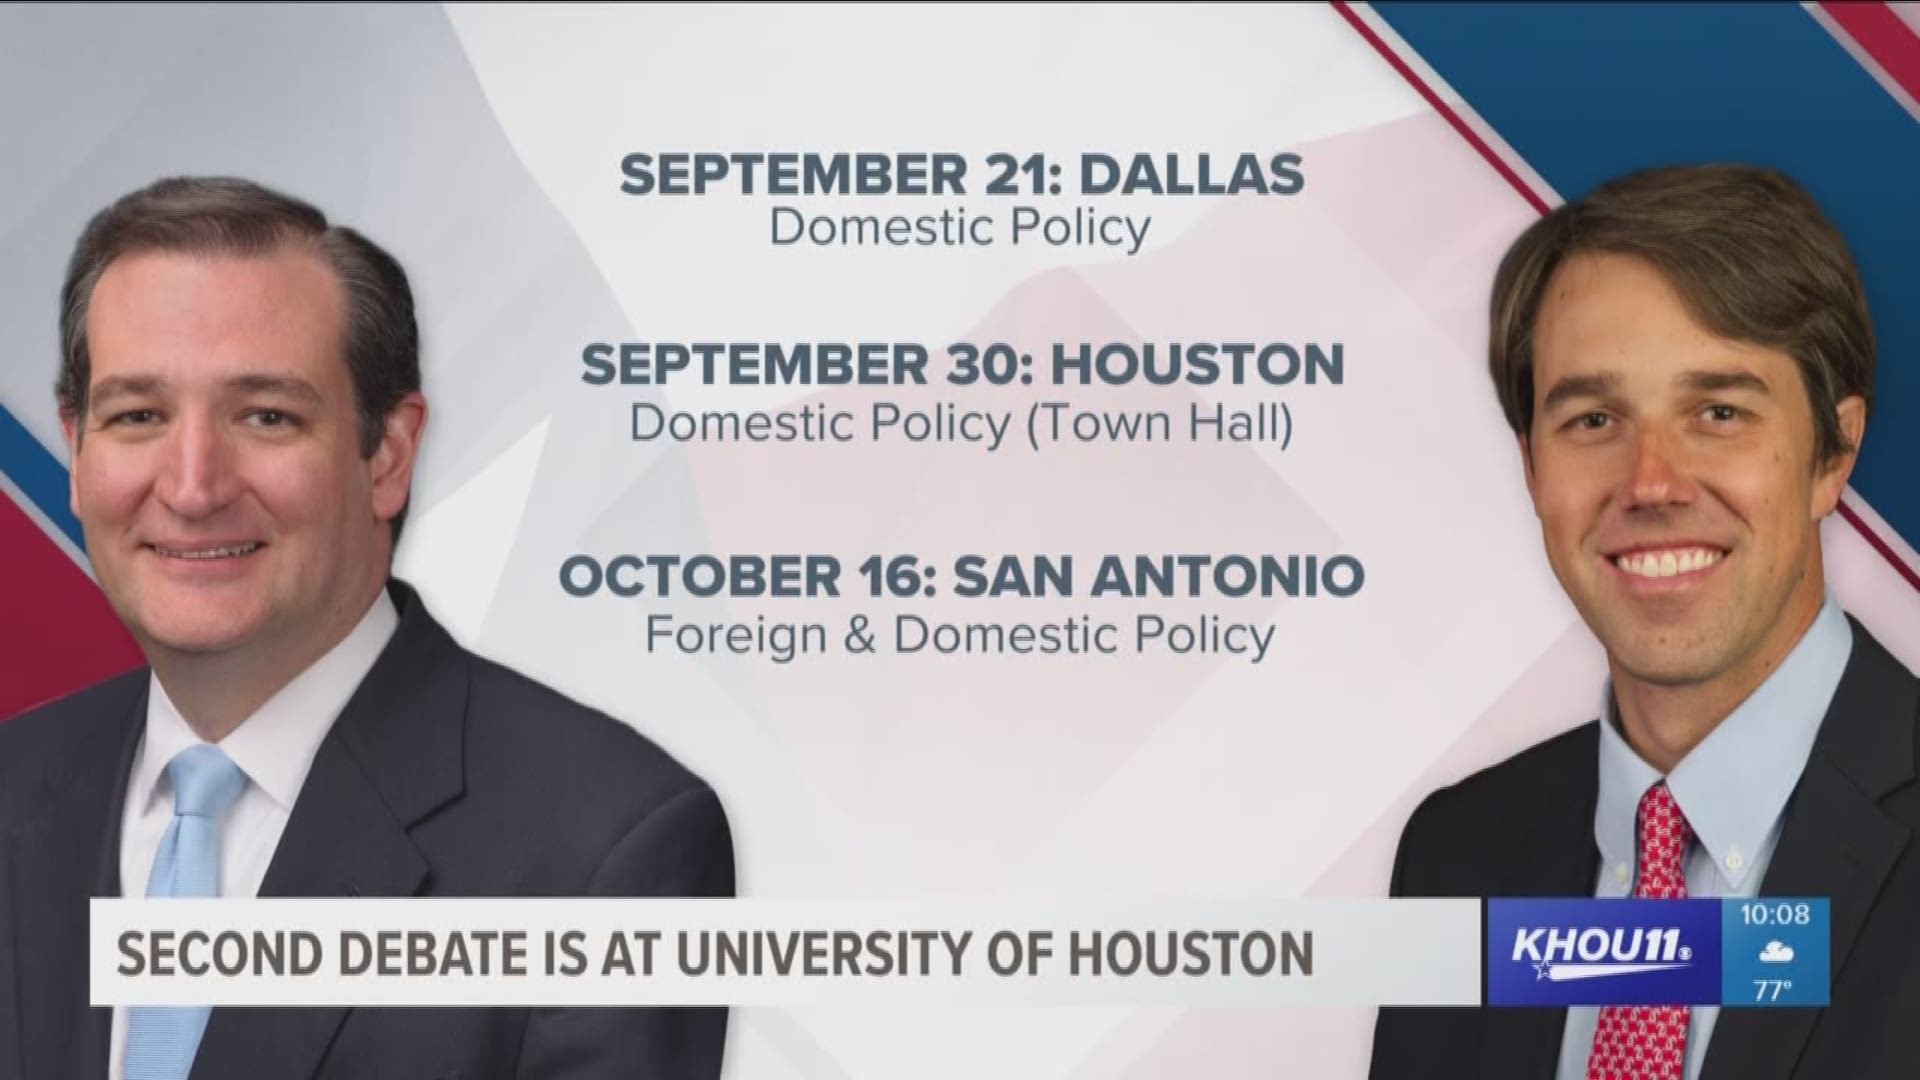 Sen. Ted Cruz and Congressman Beto O'Rourke are set for three debates ahead of the U.S. Senate election.